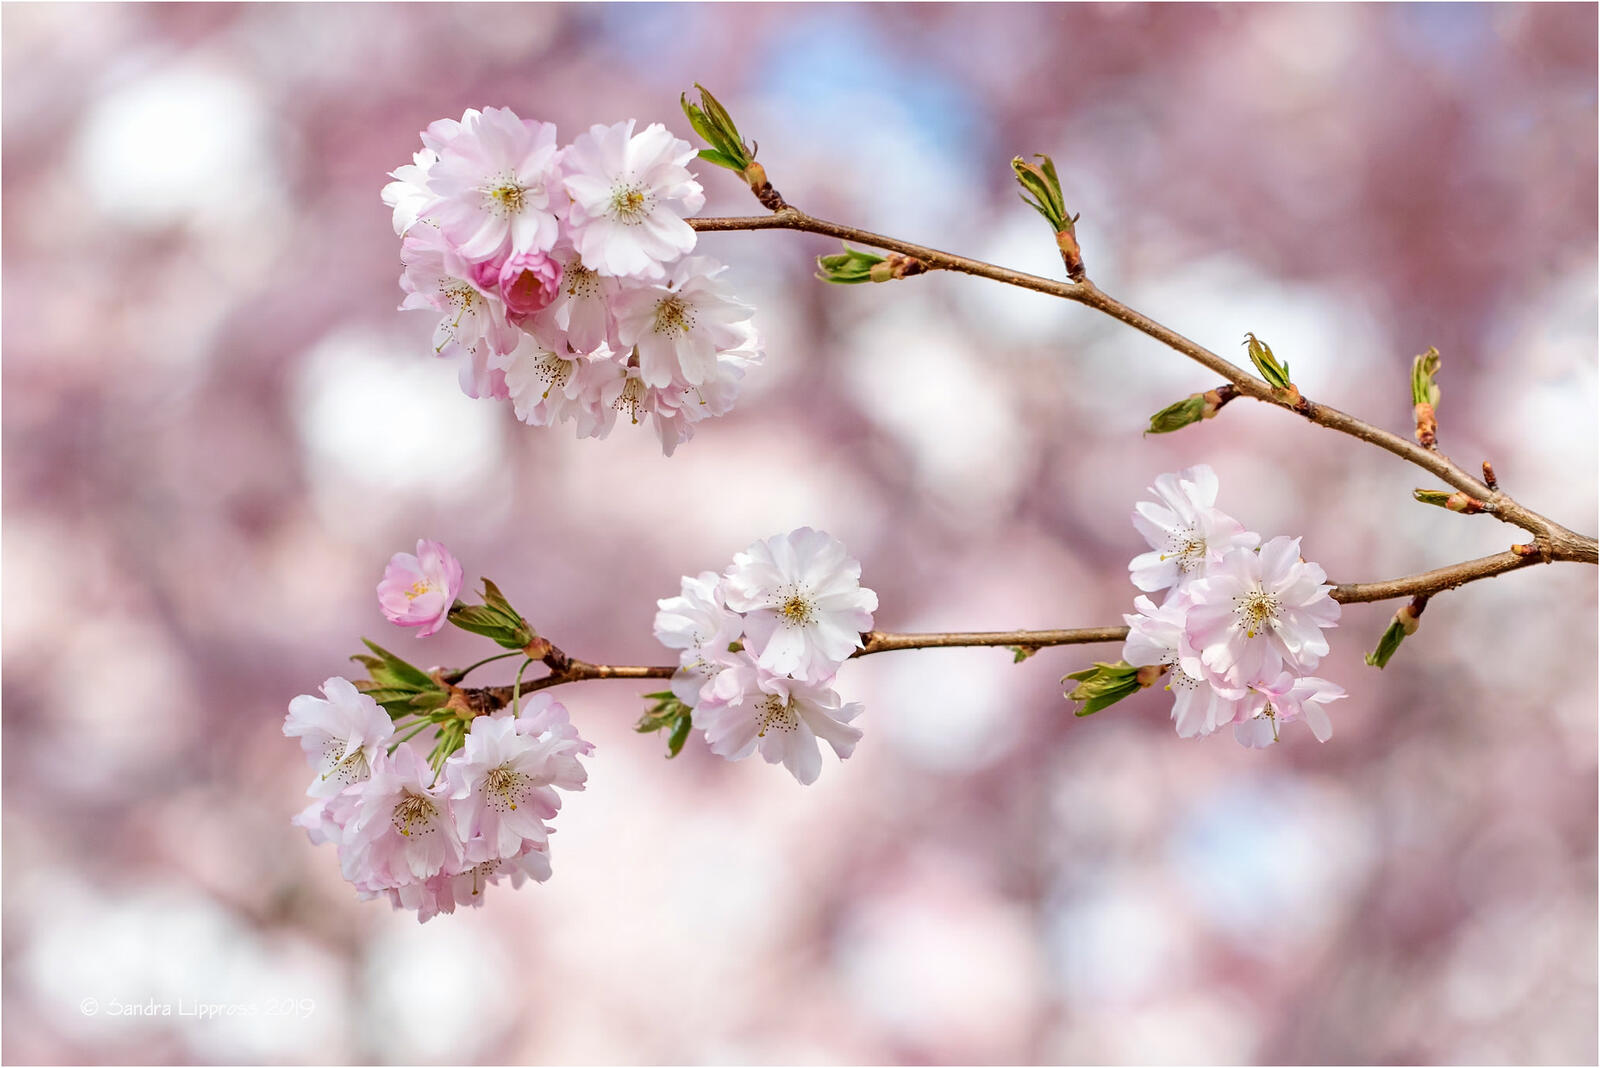 Wallpapers Cherryblossoms spring flowering flowering branch flora on the desktop